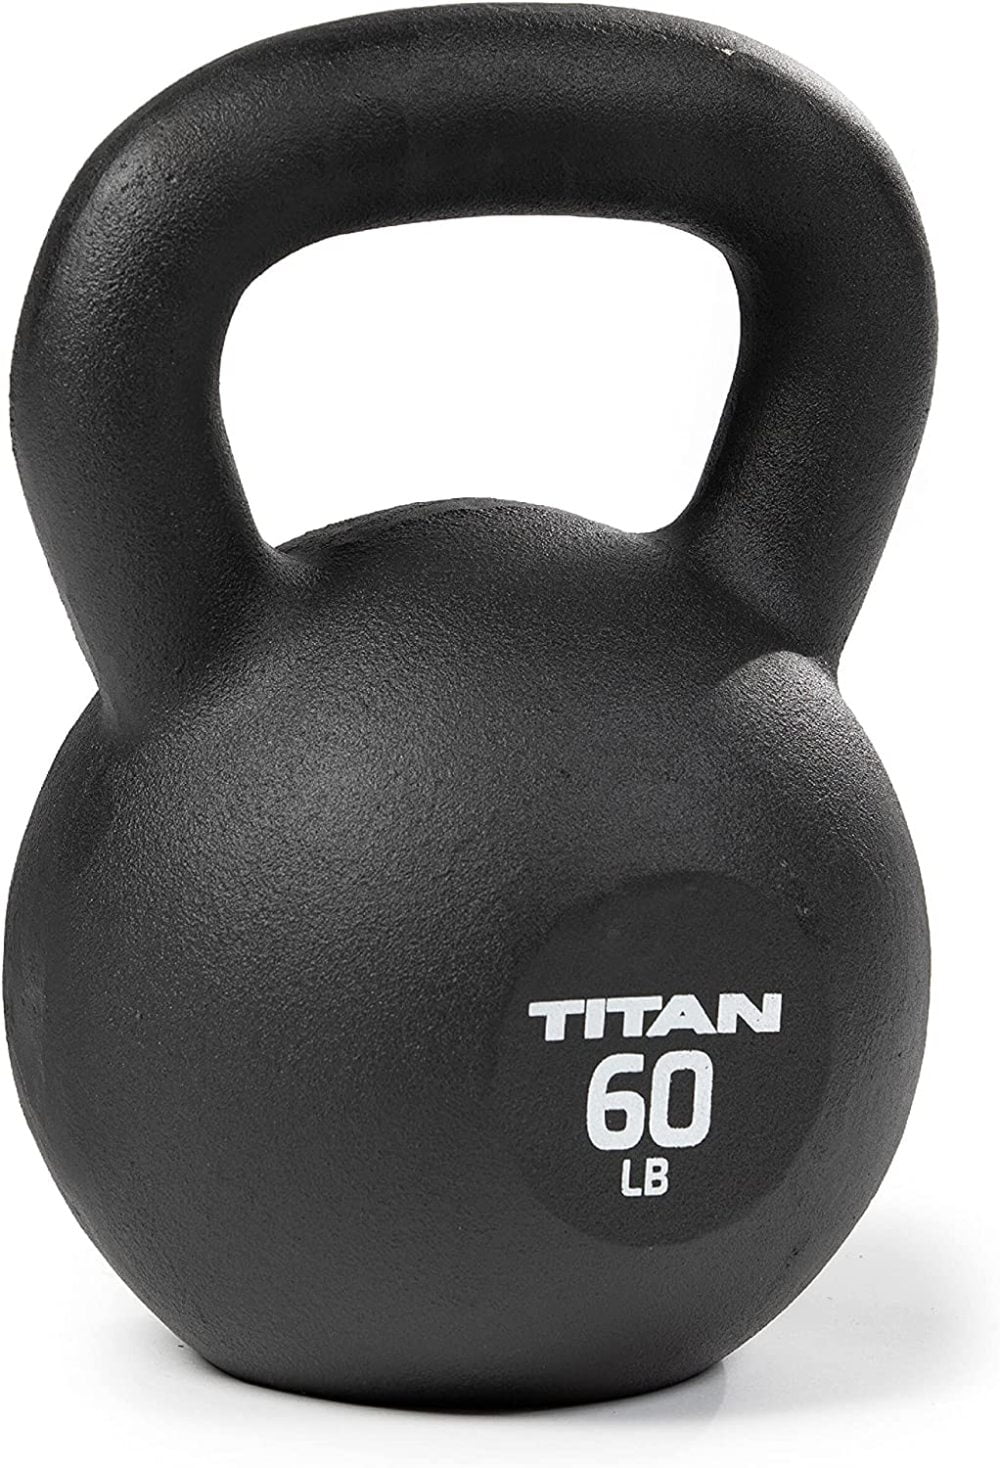 Single Piece Casting LB Markings Full Body Workout Titan Fitness 60 LB Cast Iron Kettlebell 